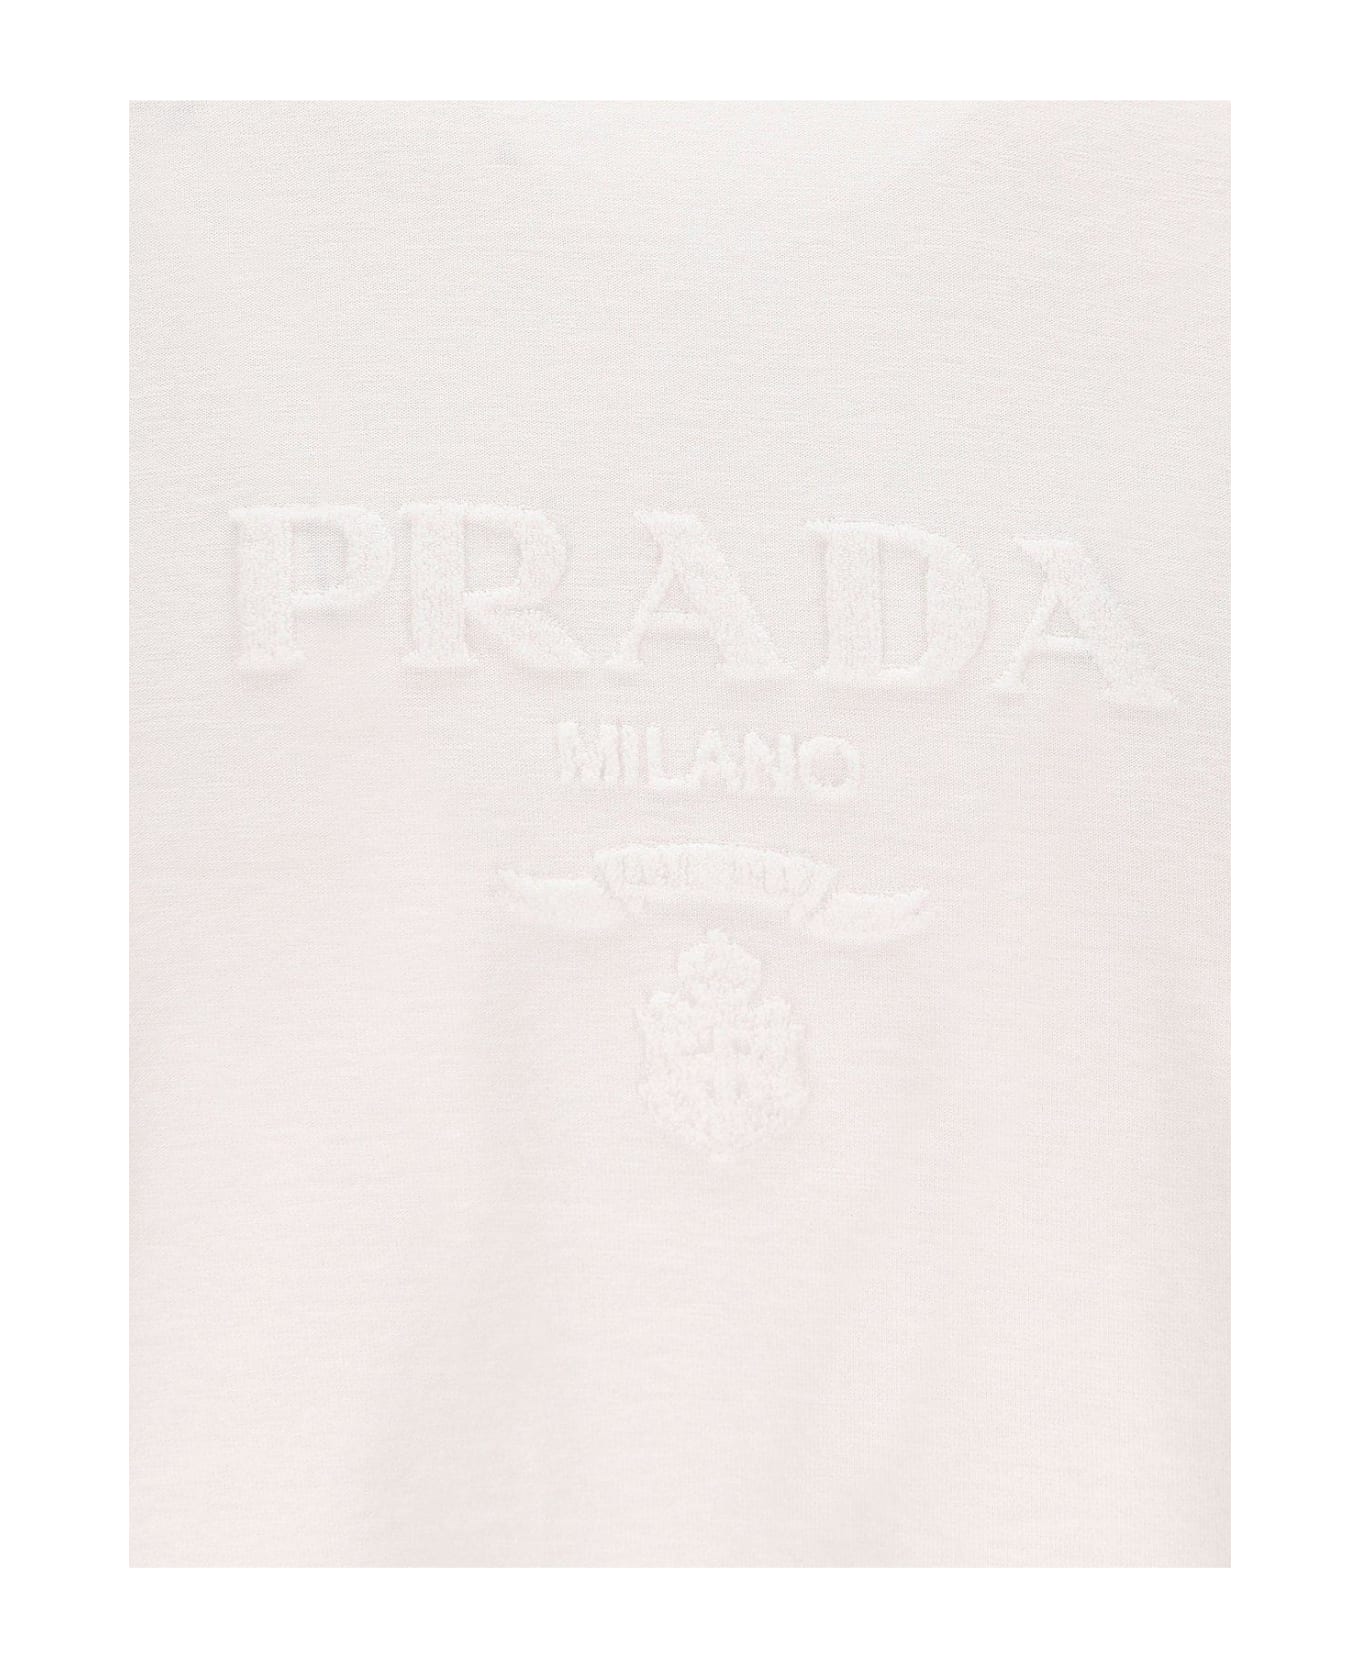 Prada Logo-detailed Crewneck T-shirt - White